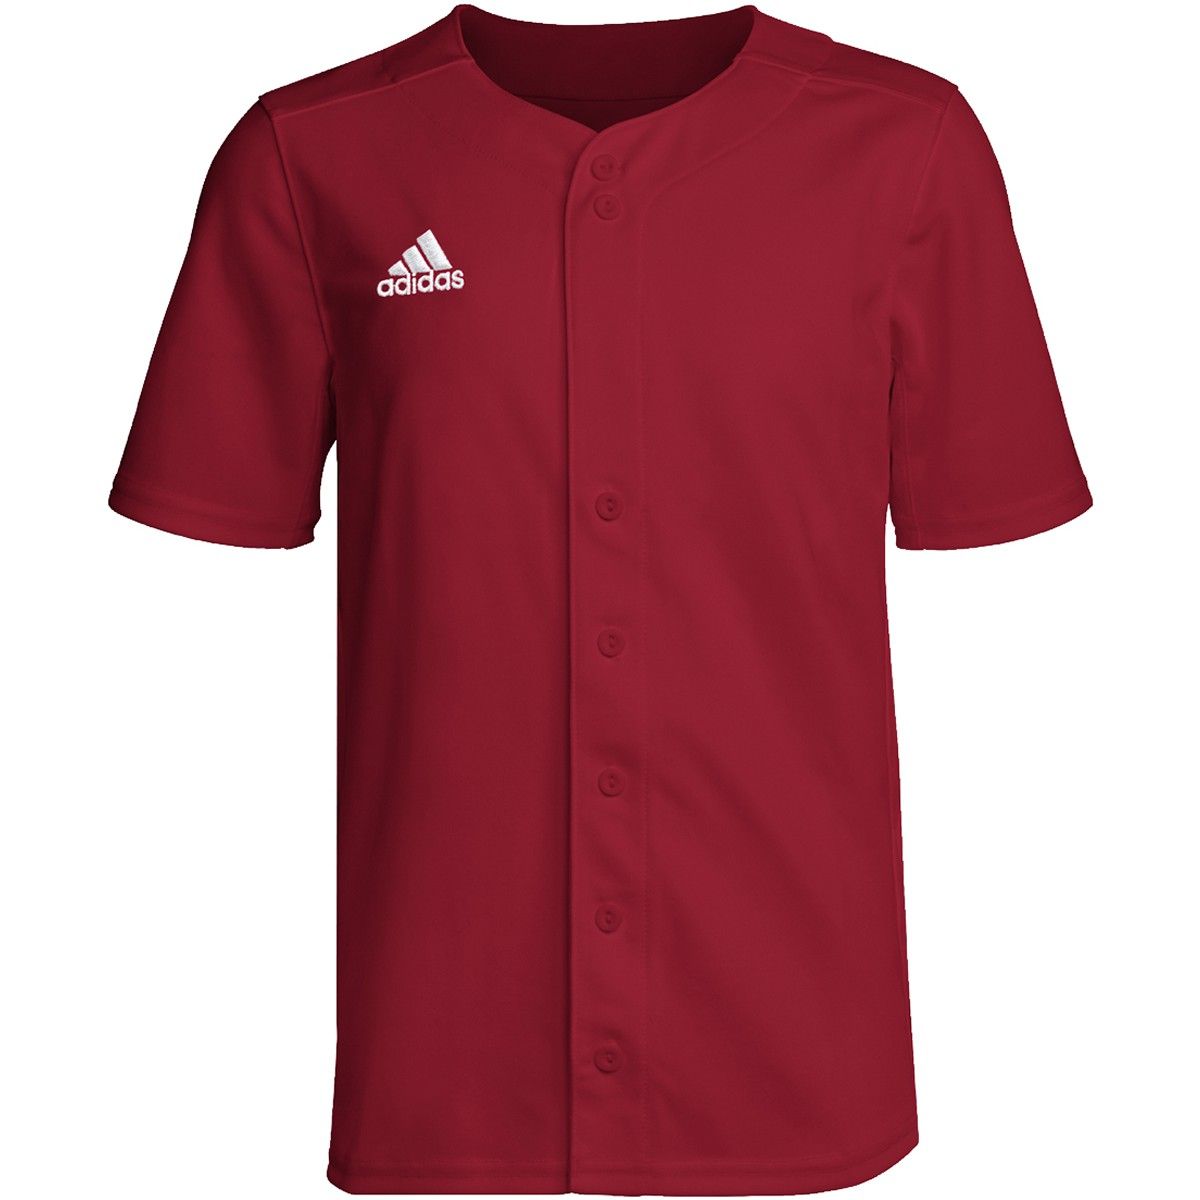 Adidas Youth Icon Pro Full Button Baseball Jersey, M / Tmpwrd